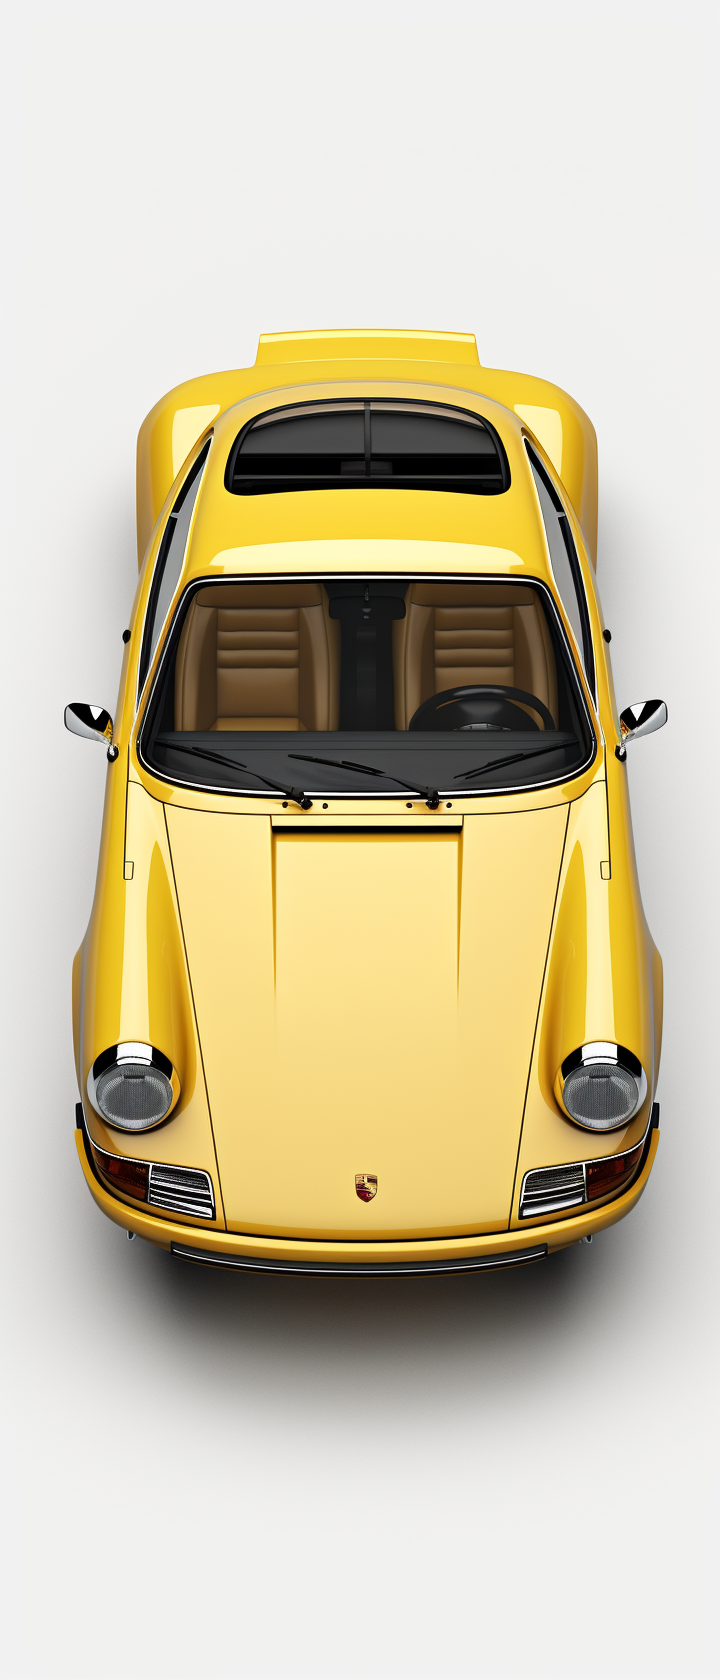 Porsche-911-render-Evex-virtual-reality